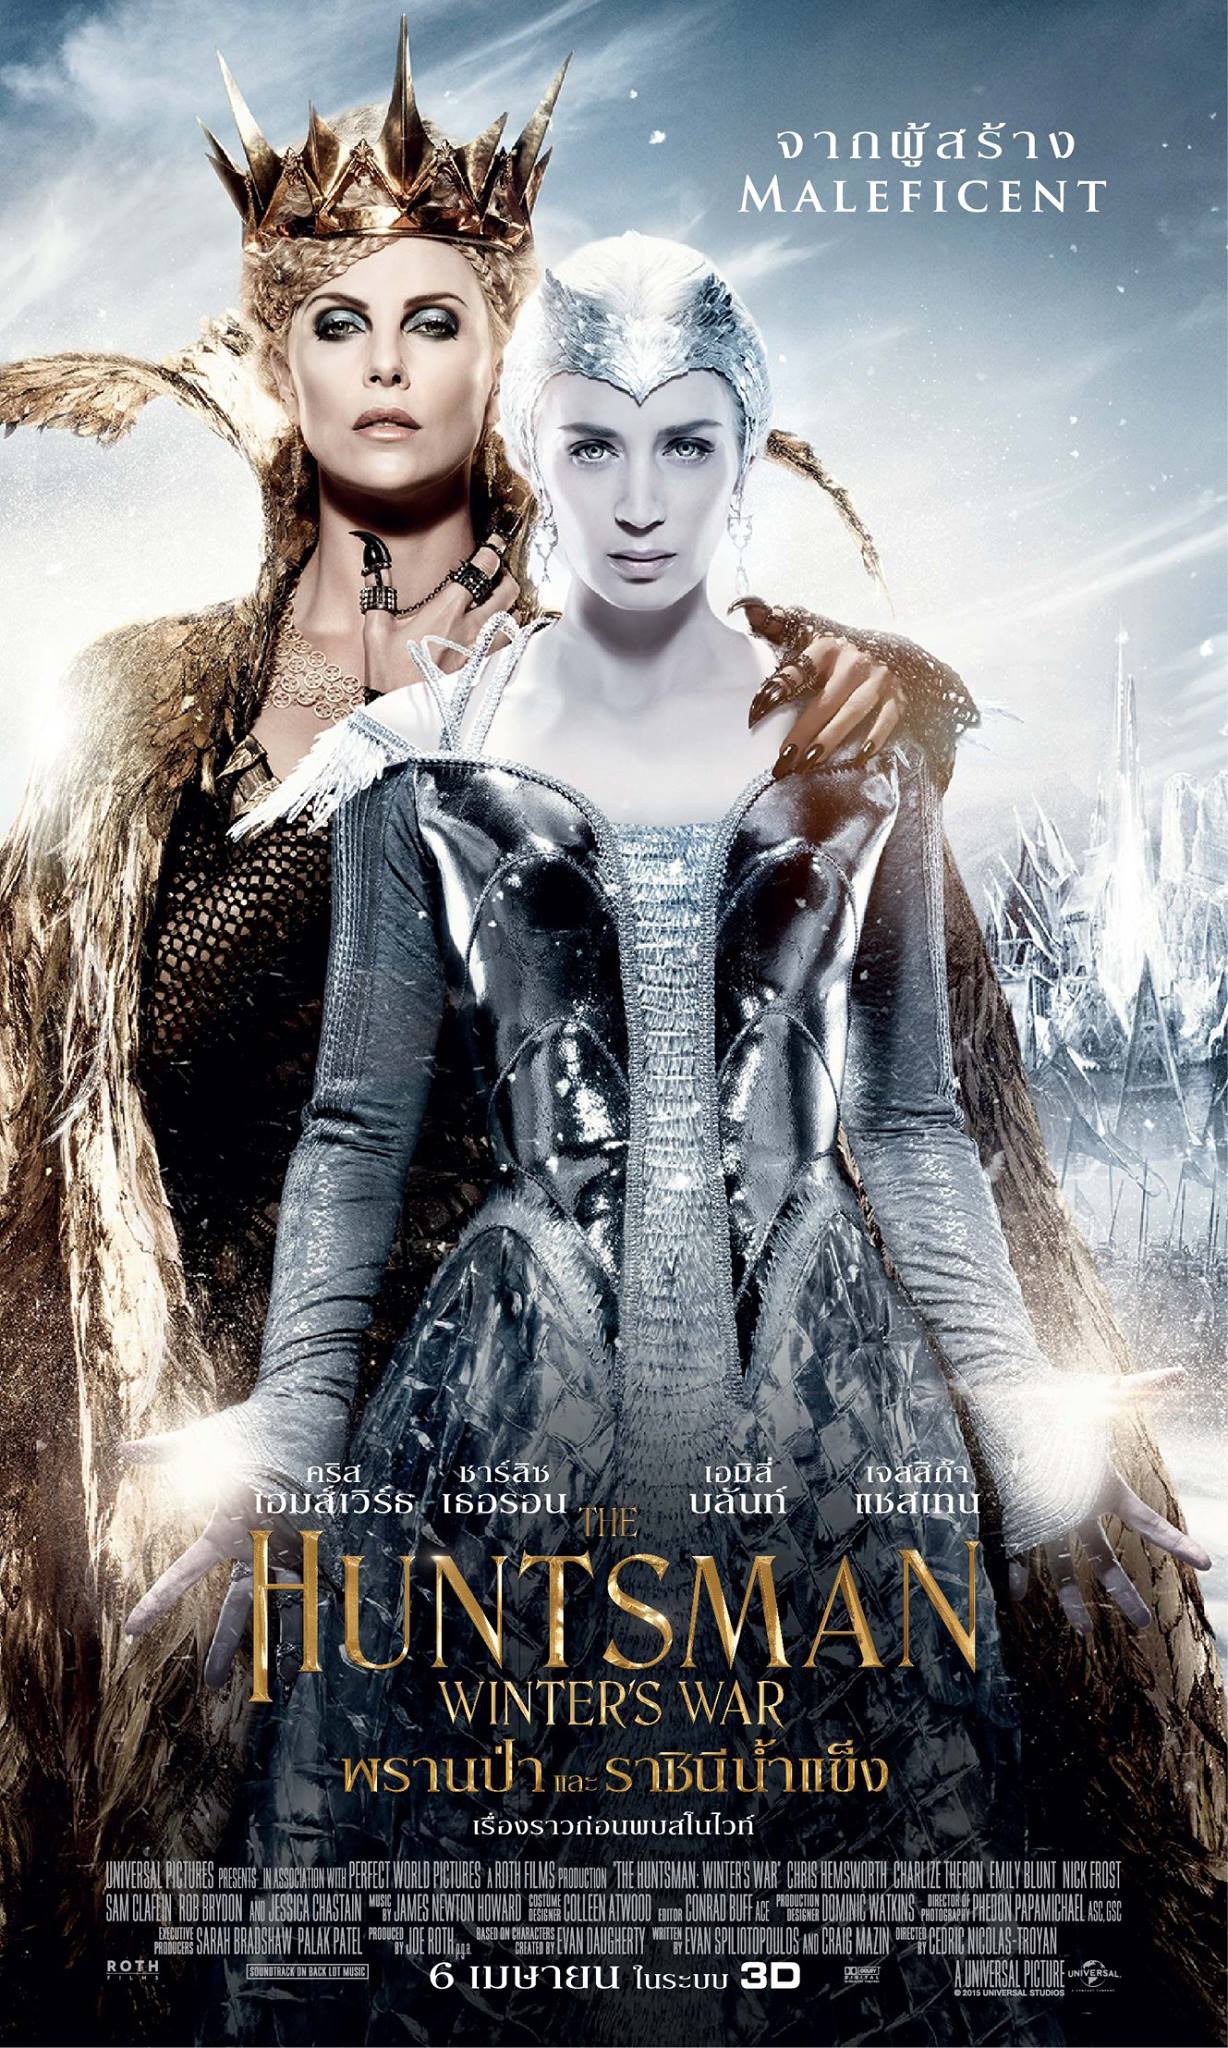 Mega Sized Movie Poster Image for The Huntsman (#9 of 15)